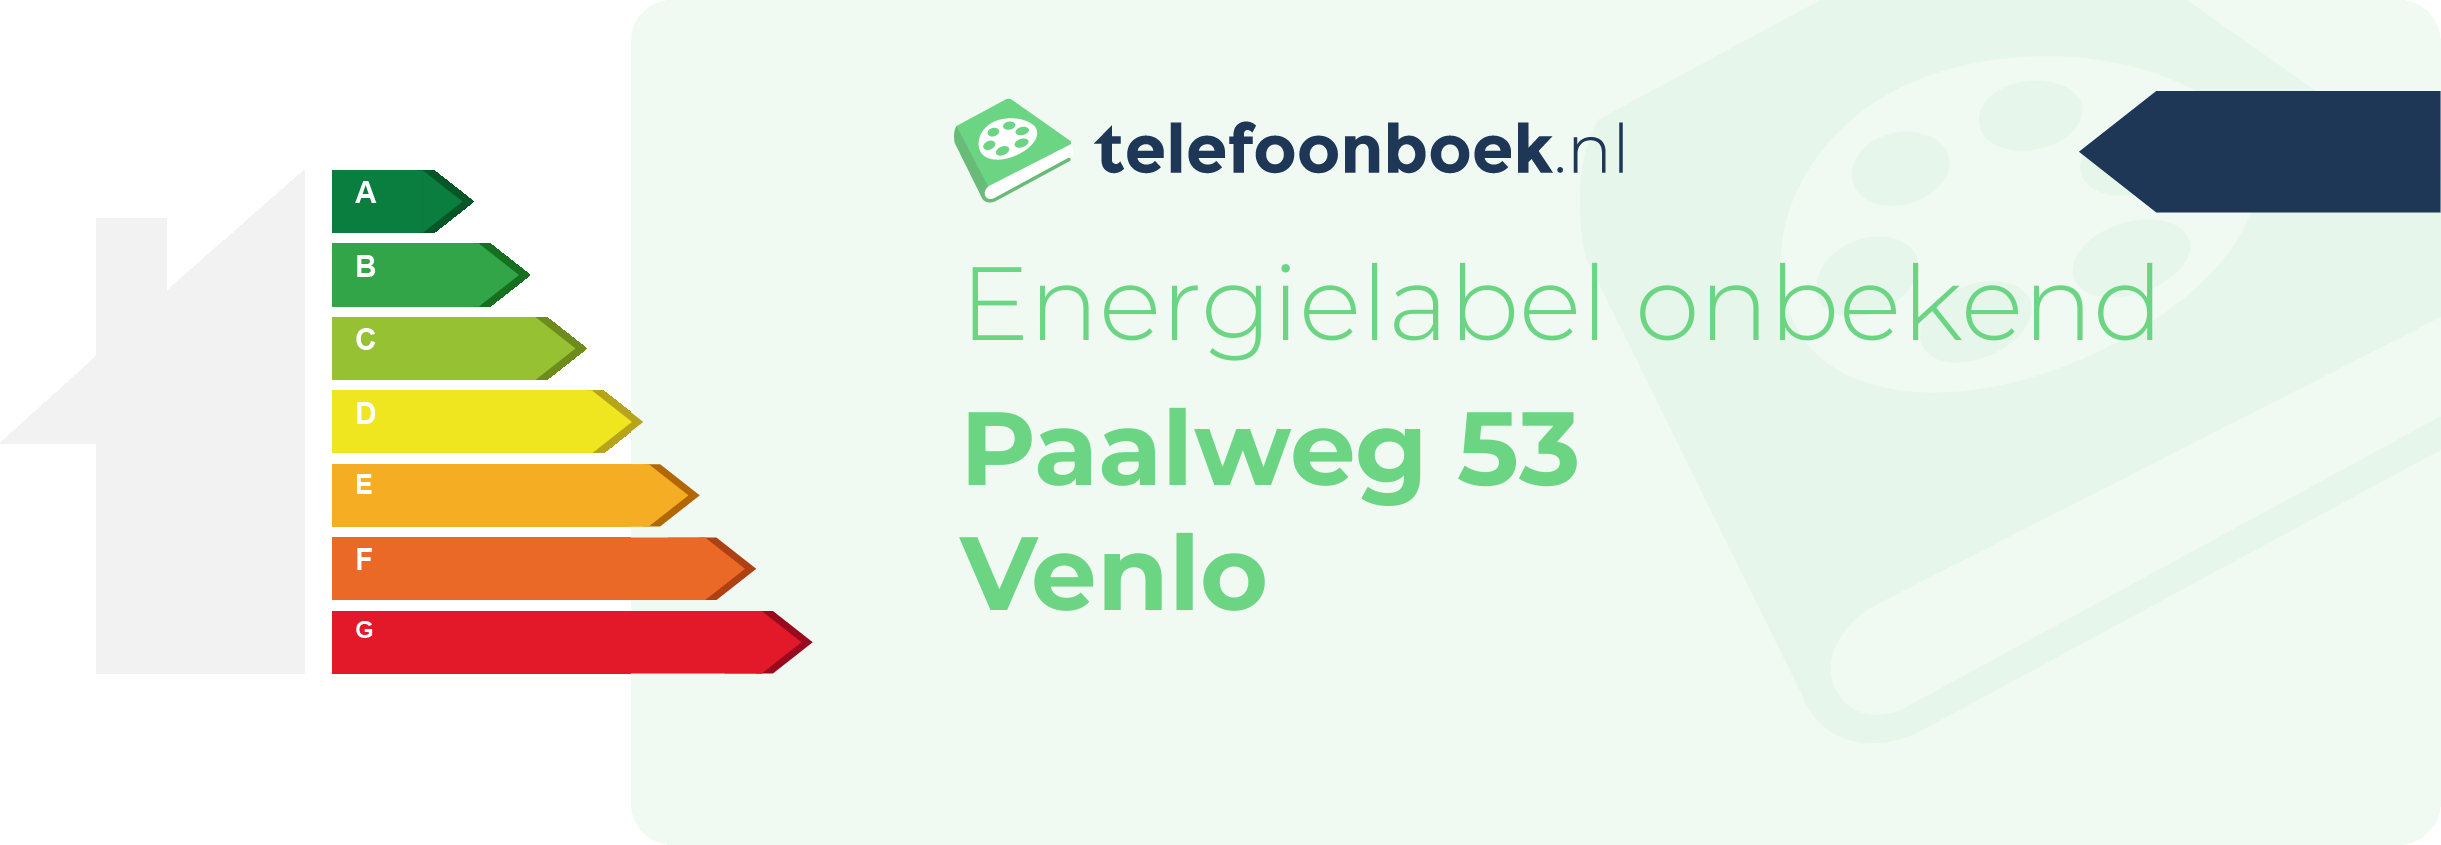 Energielabel Paalweg 53 Venlo